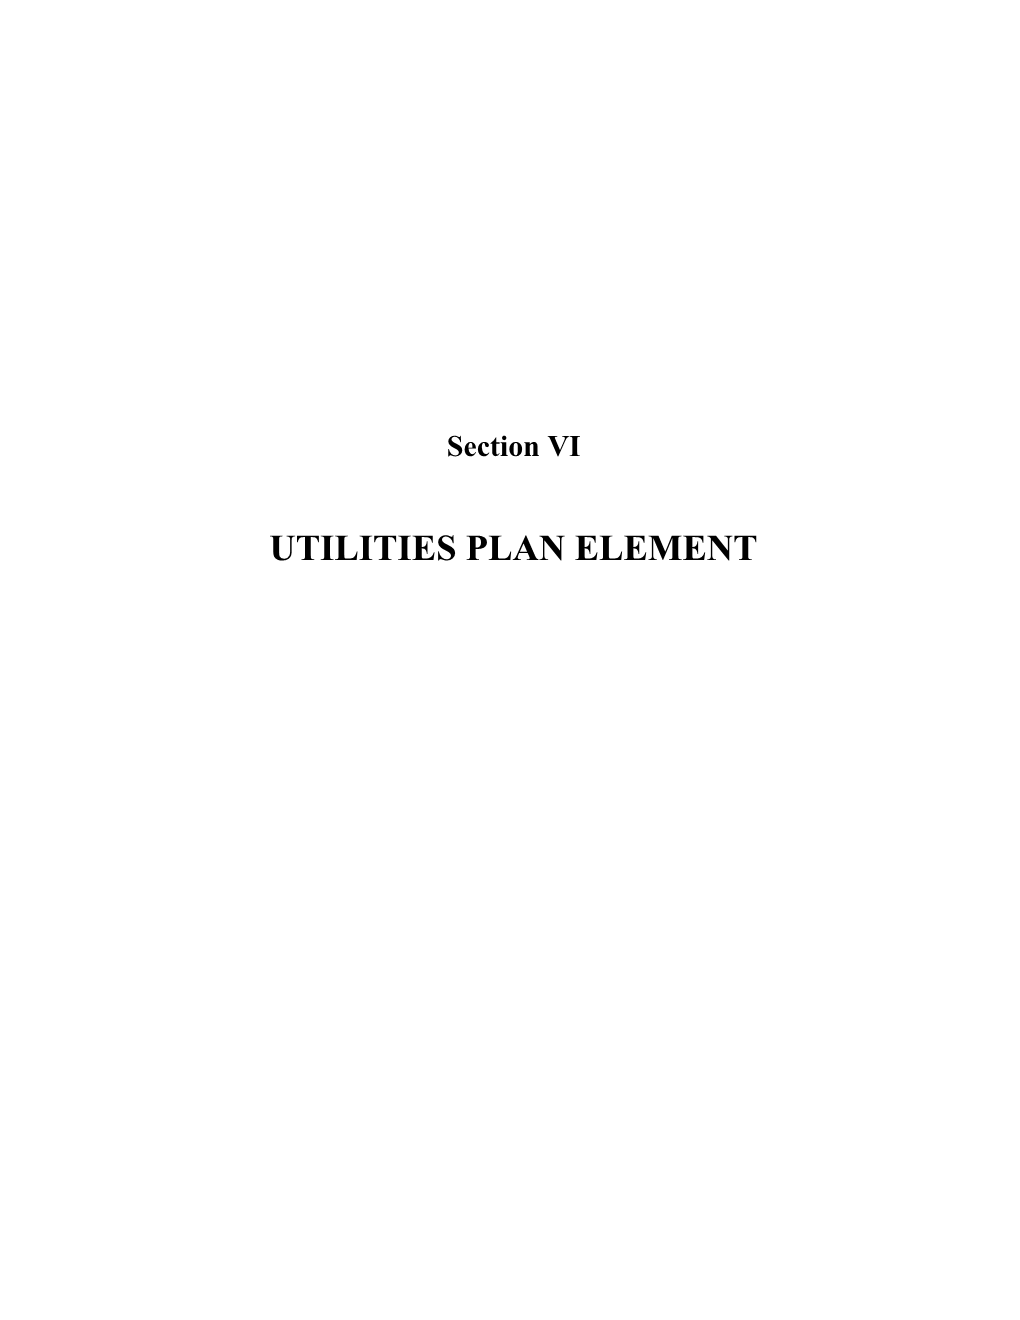 Section Vi - Utilities Plan Element